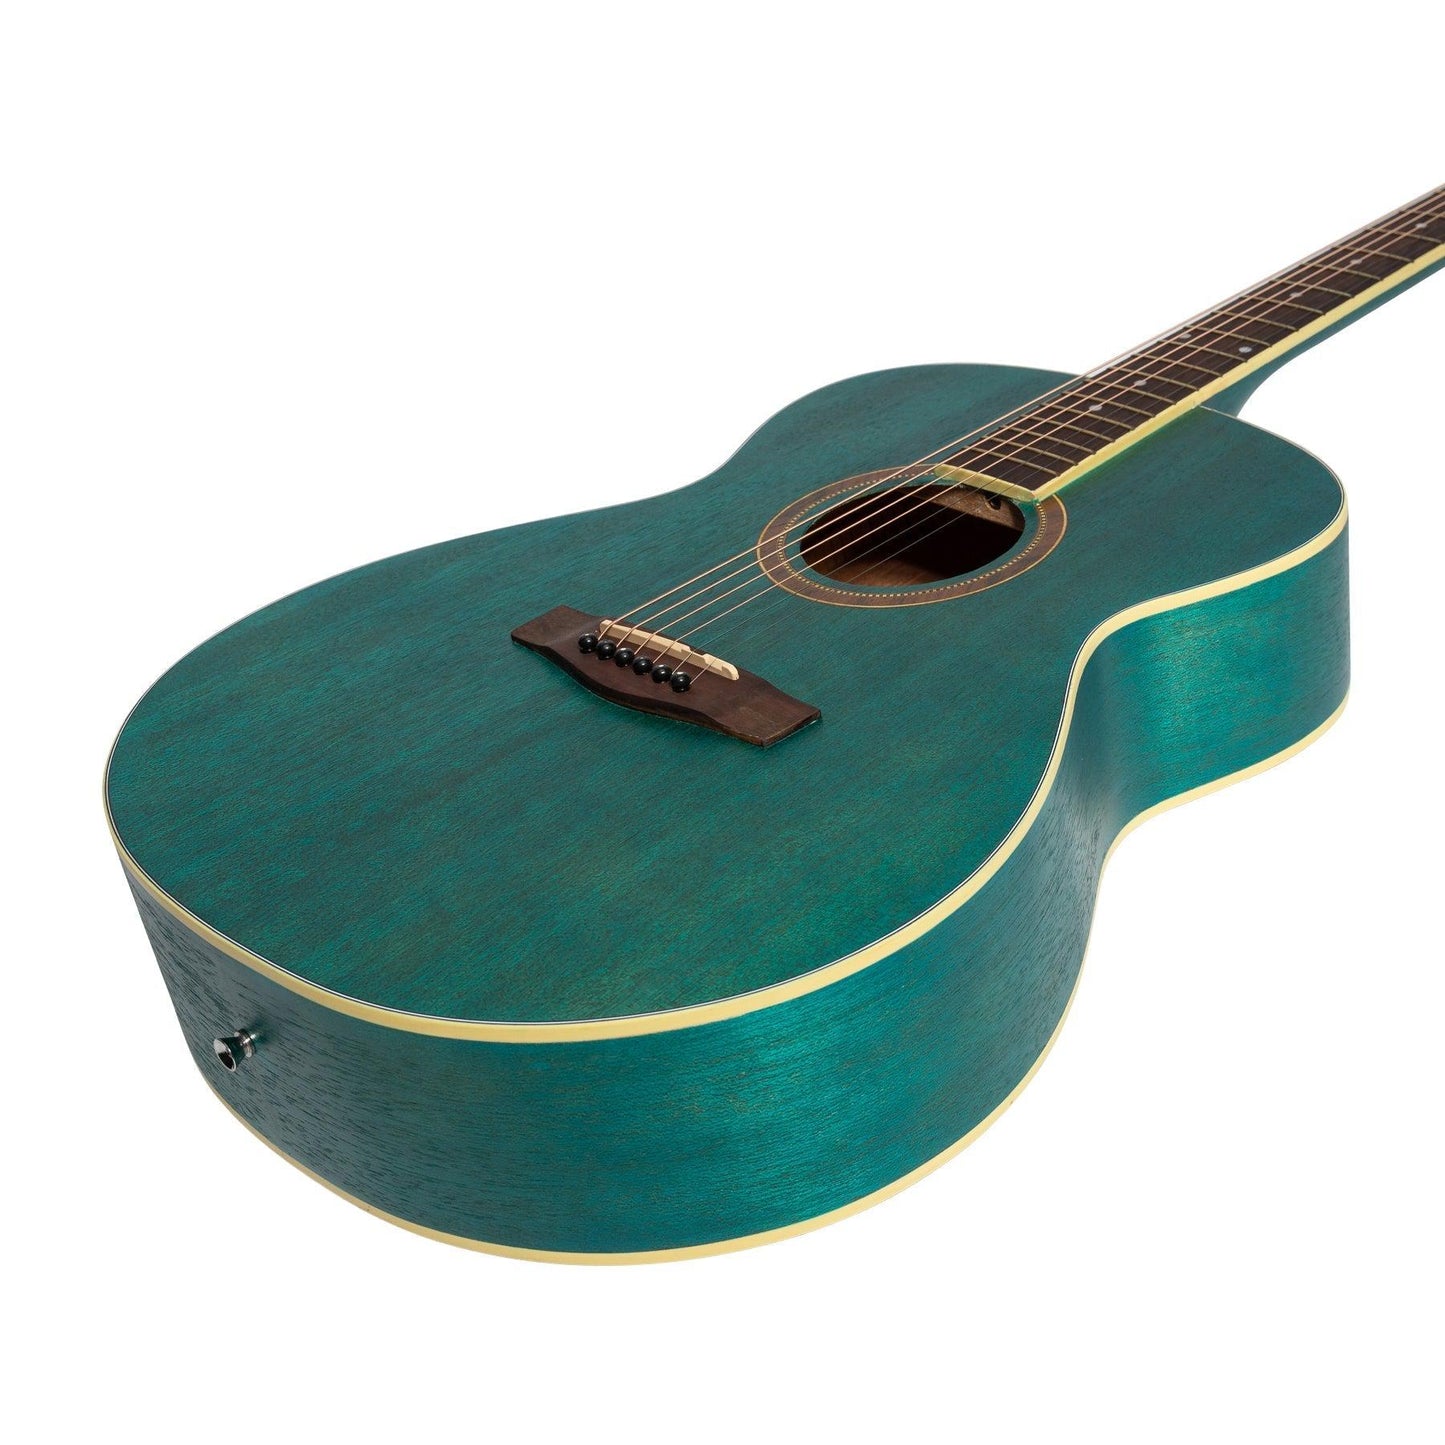 Martinez '41 Series' Folk Size Acoustic Guitar Pack (Teal Green)